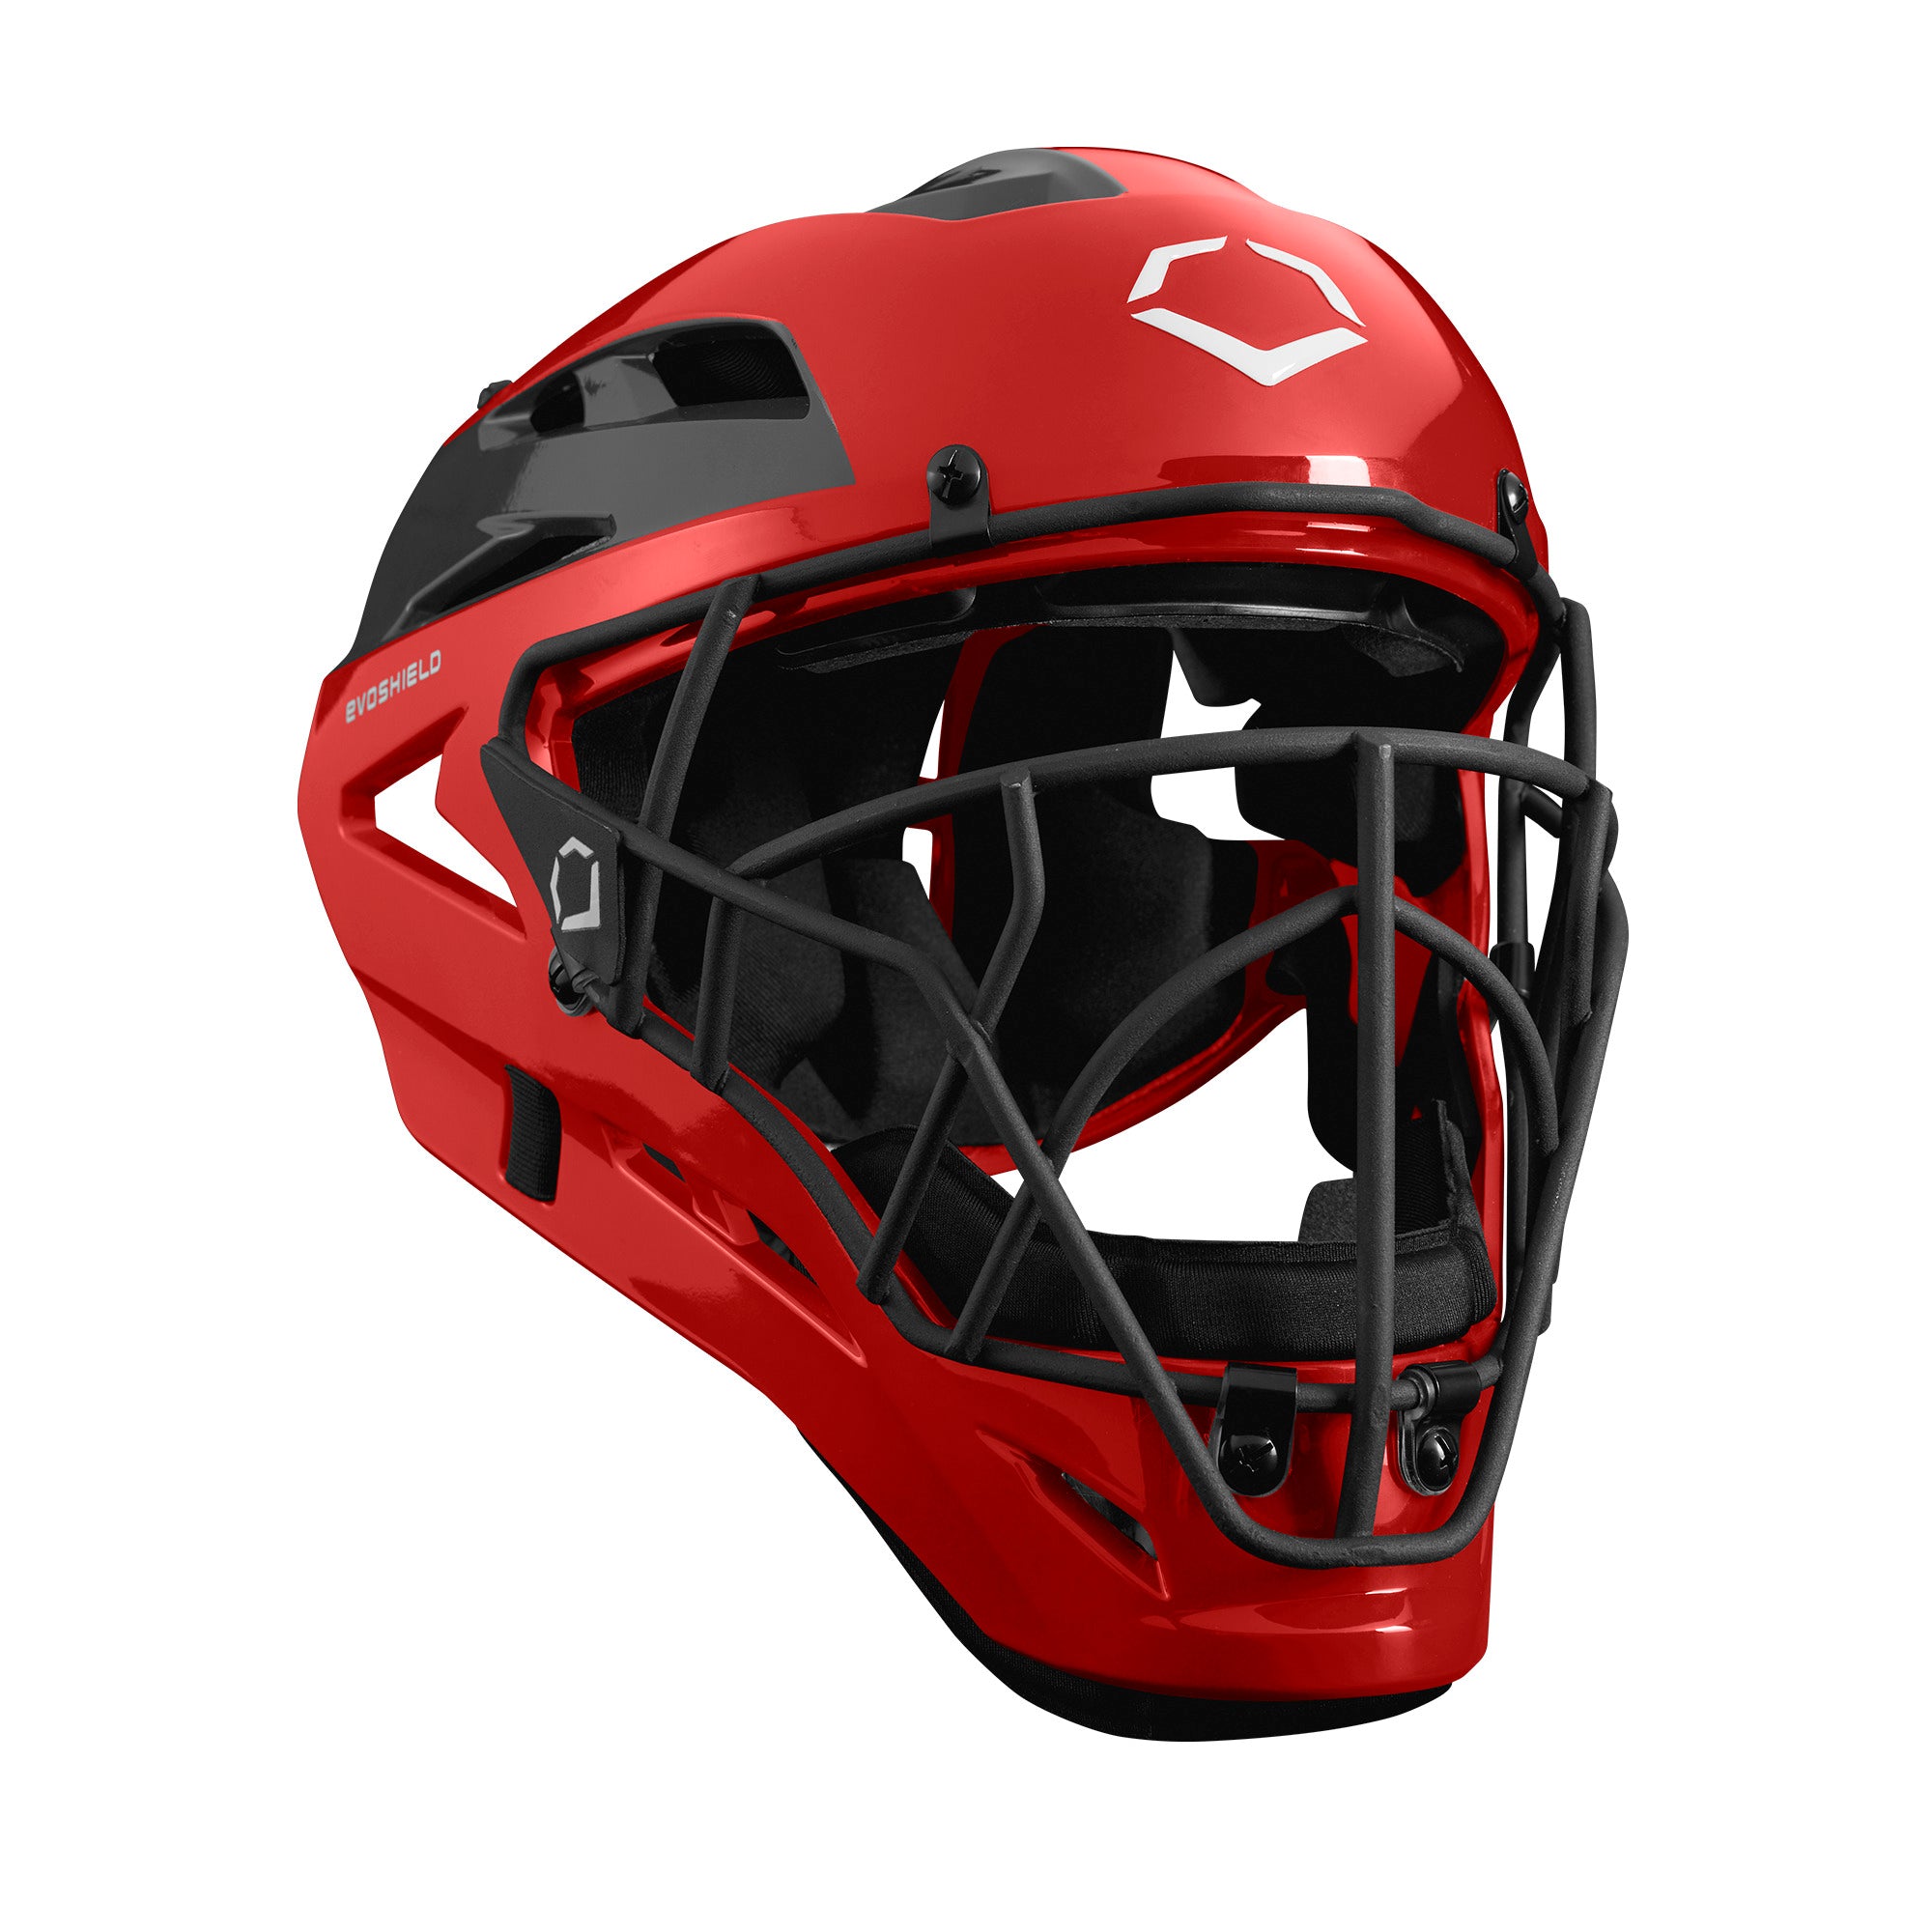 Evoshield Pro-SRZ Catcher's Helmet Scarlet